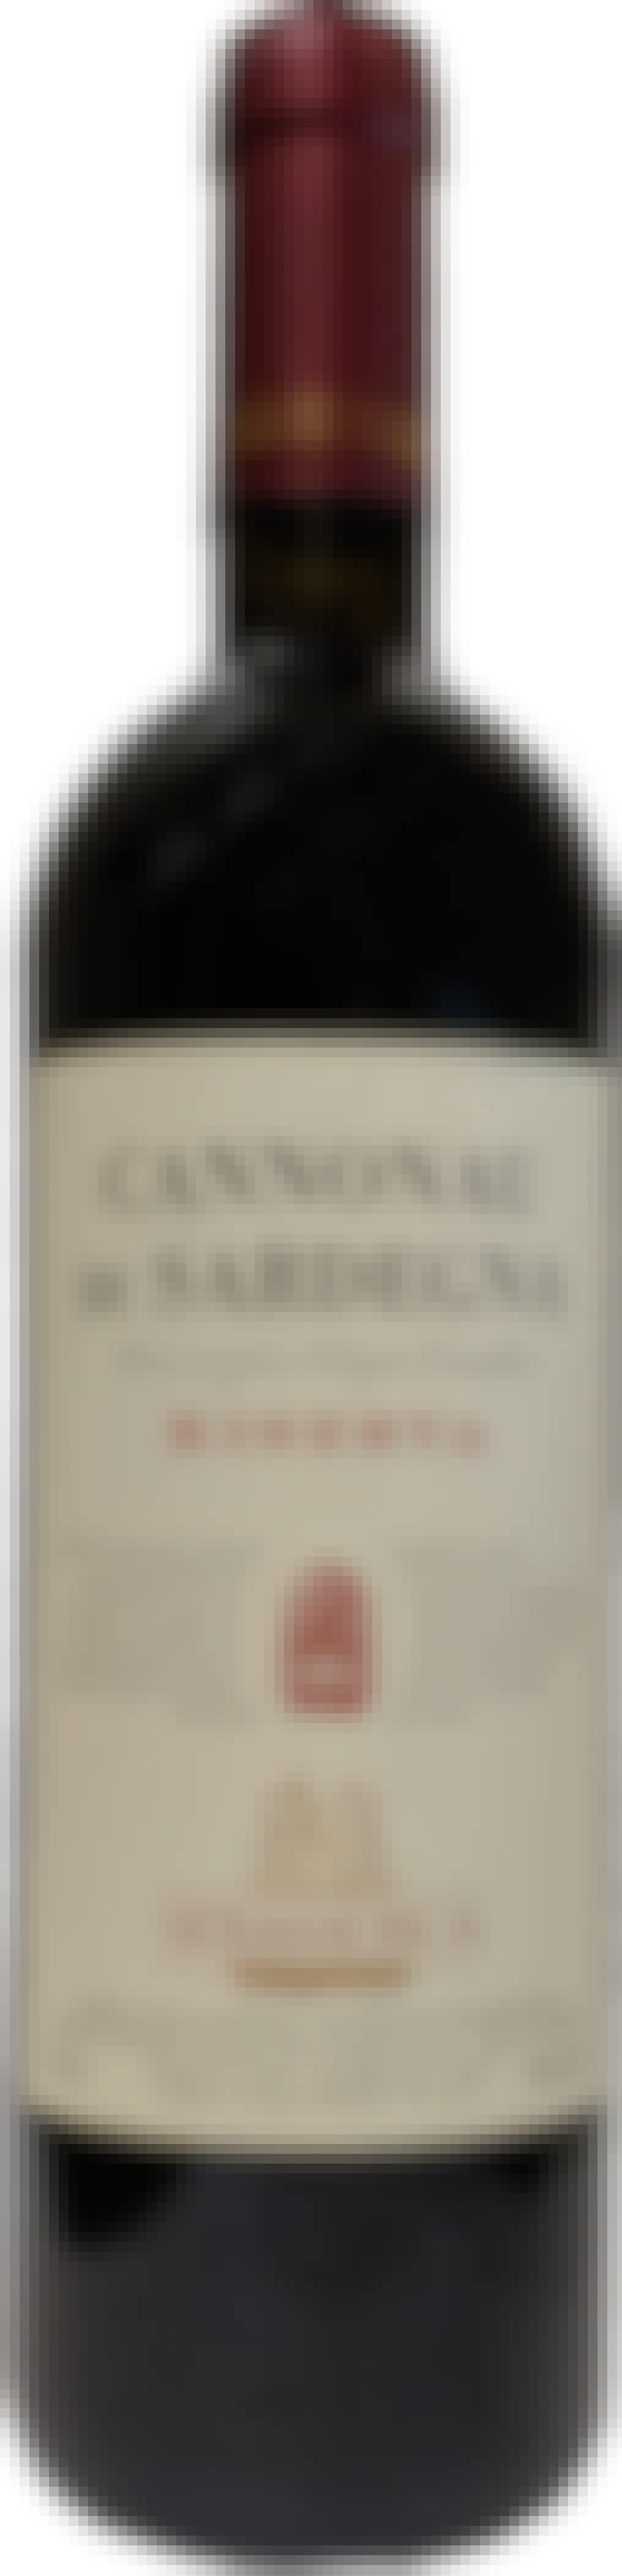 Sella & Mosca Cannonau di Sardegna Riserva 750ml